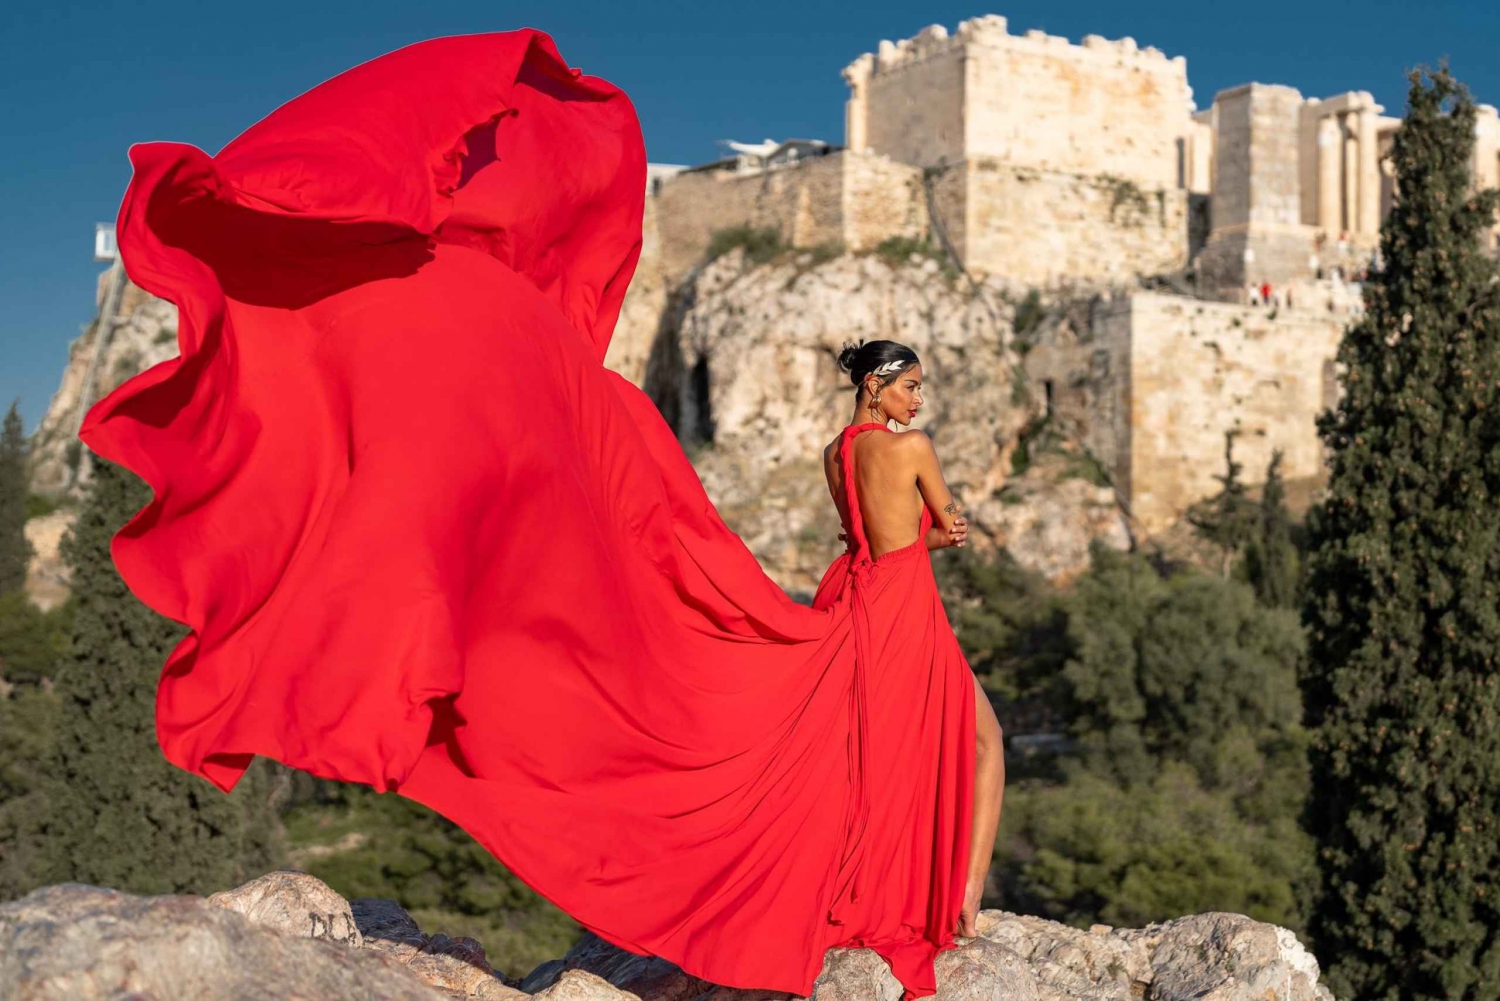 Athen: Fotoshoot med flyvende kjole 'Marilyn-pakken'